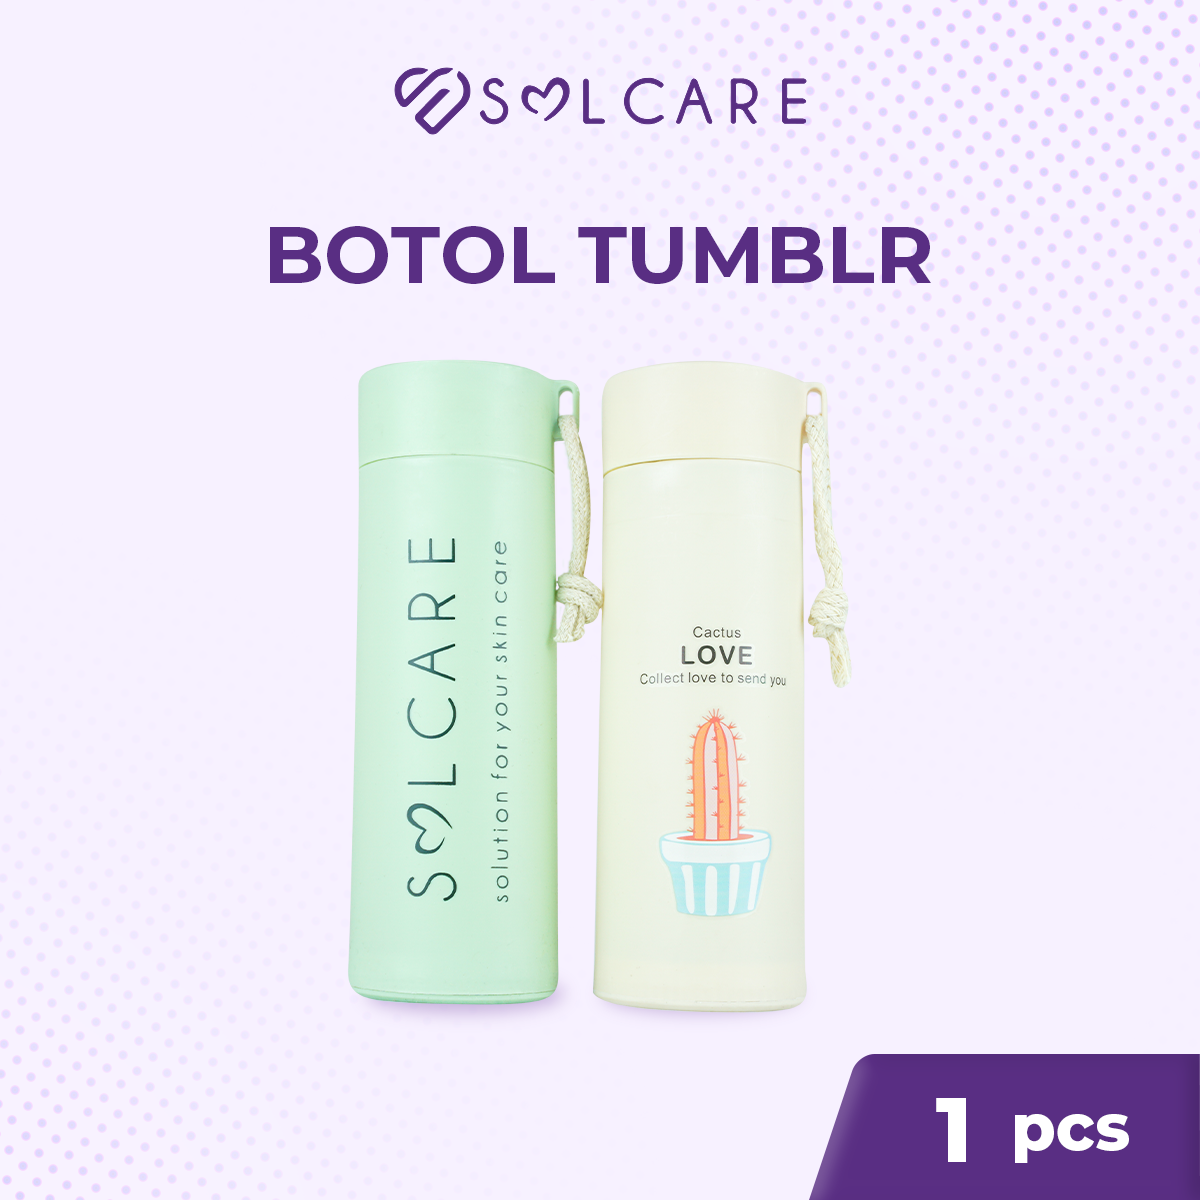 Solcare Botol Tumblr - Gift Souvenir